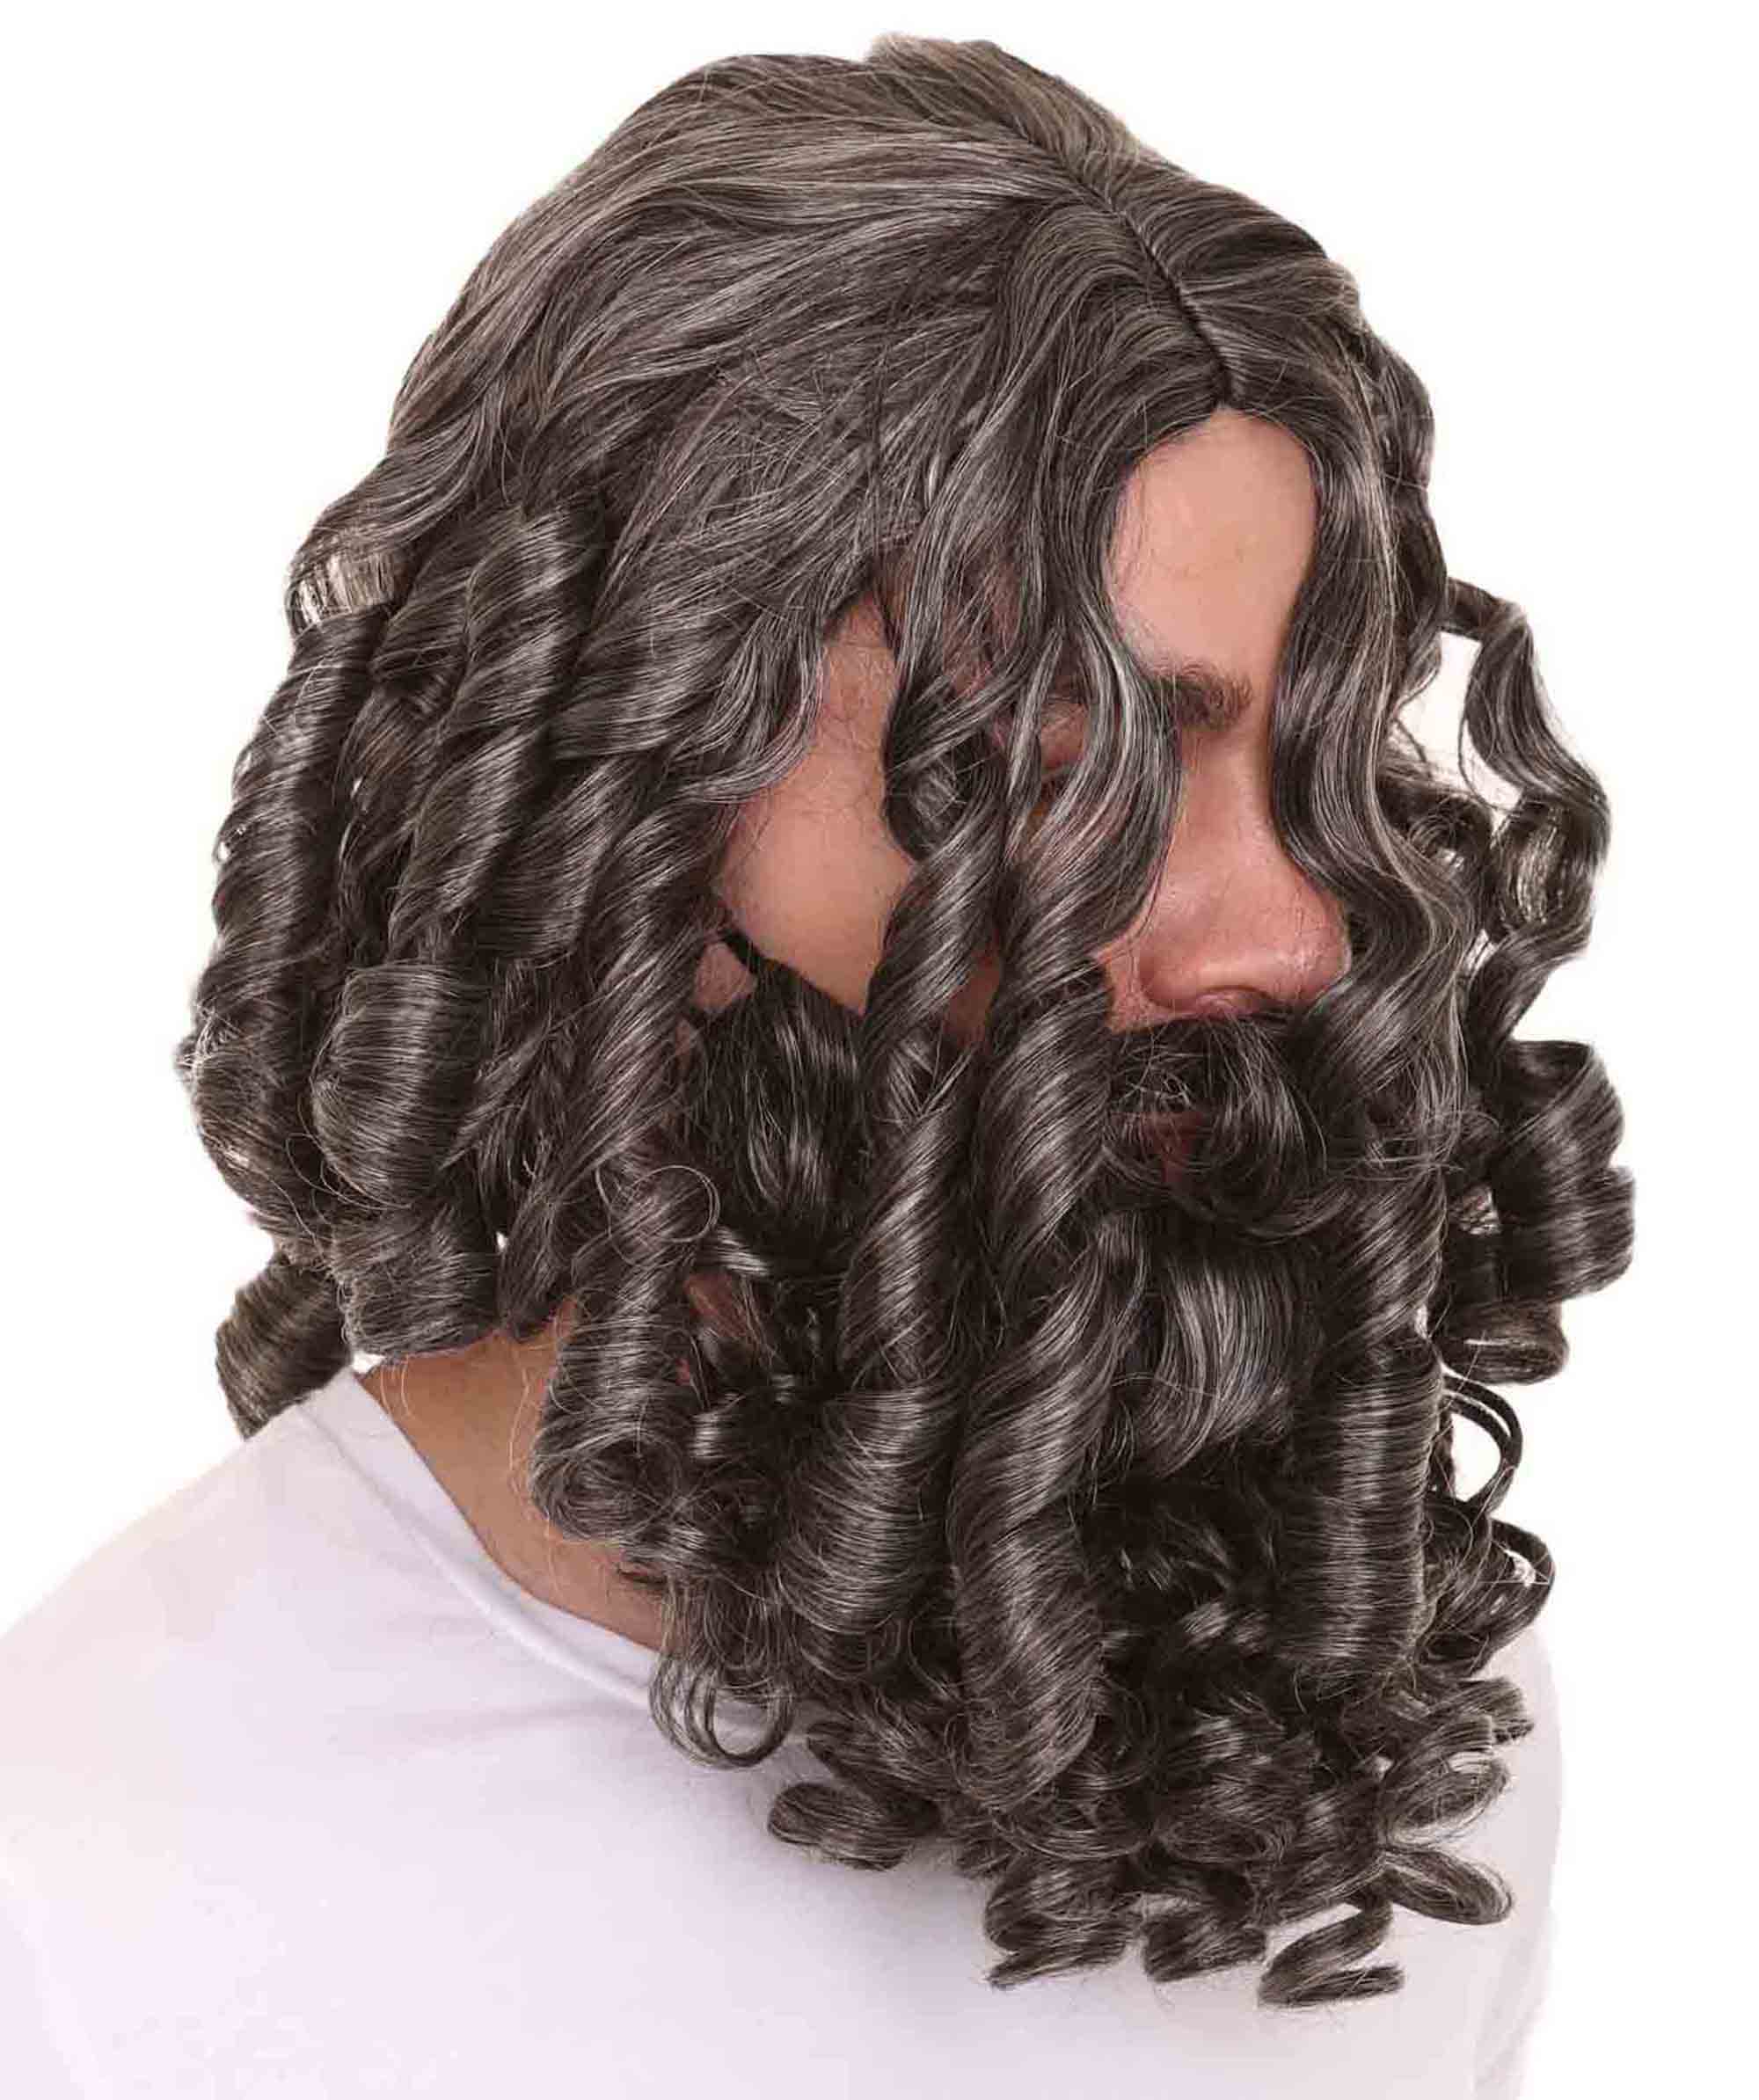 Moses Wig and Beard Set | Biblical Halloween Wigs | Premium Breathable Capless Cap